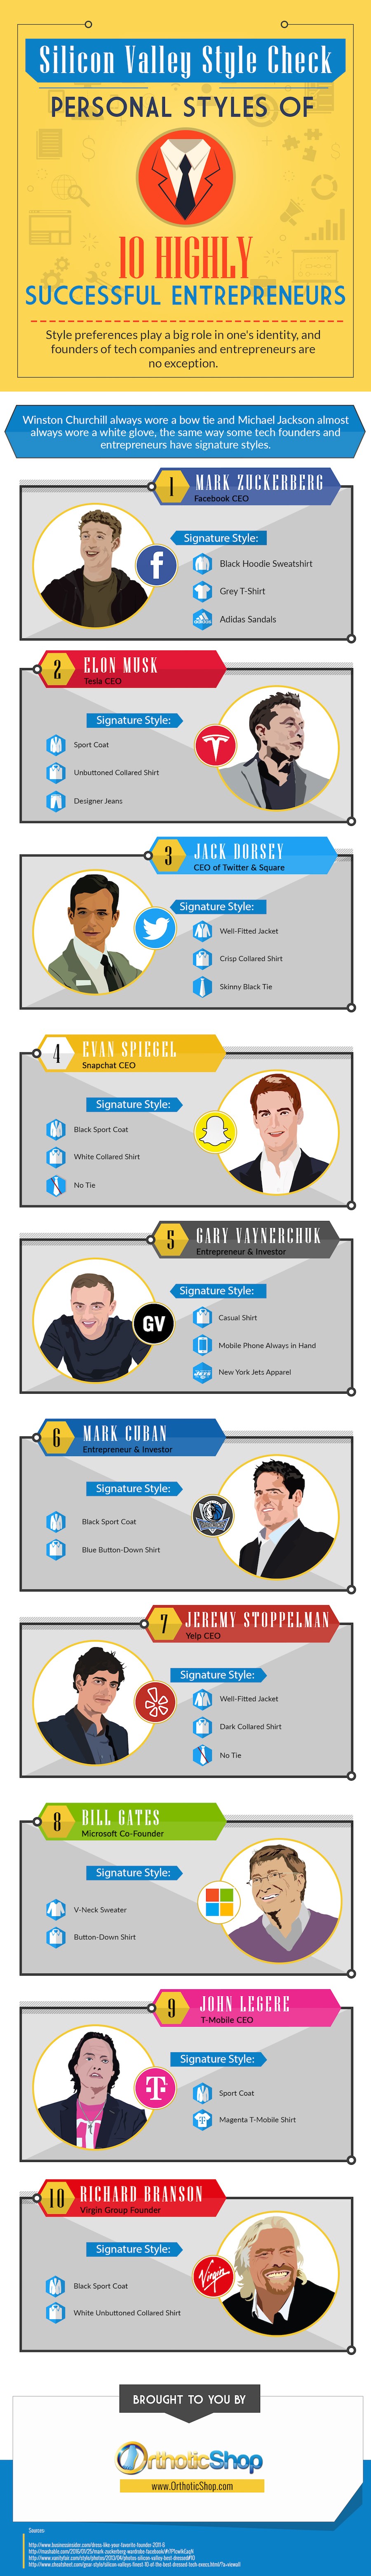 How Top Entrepreneurs & Tech Moguls Dress [Infographic]